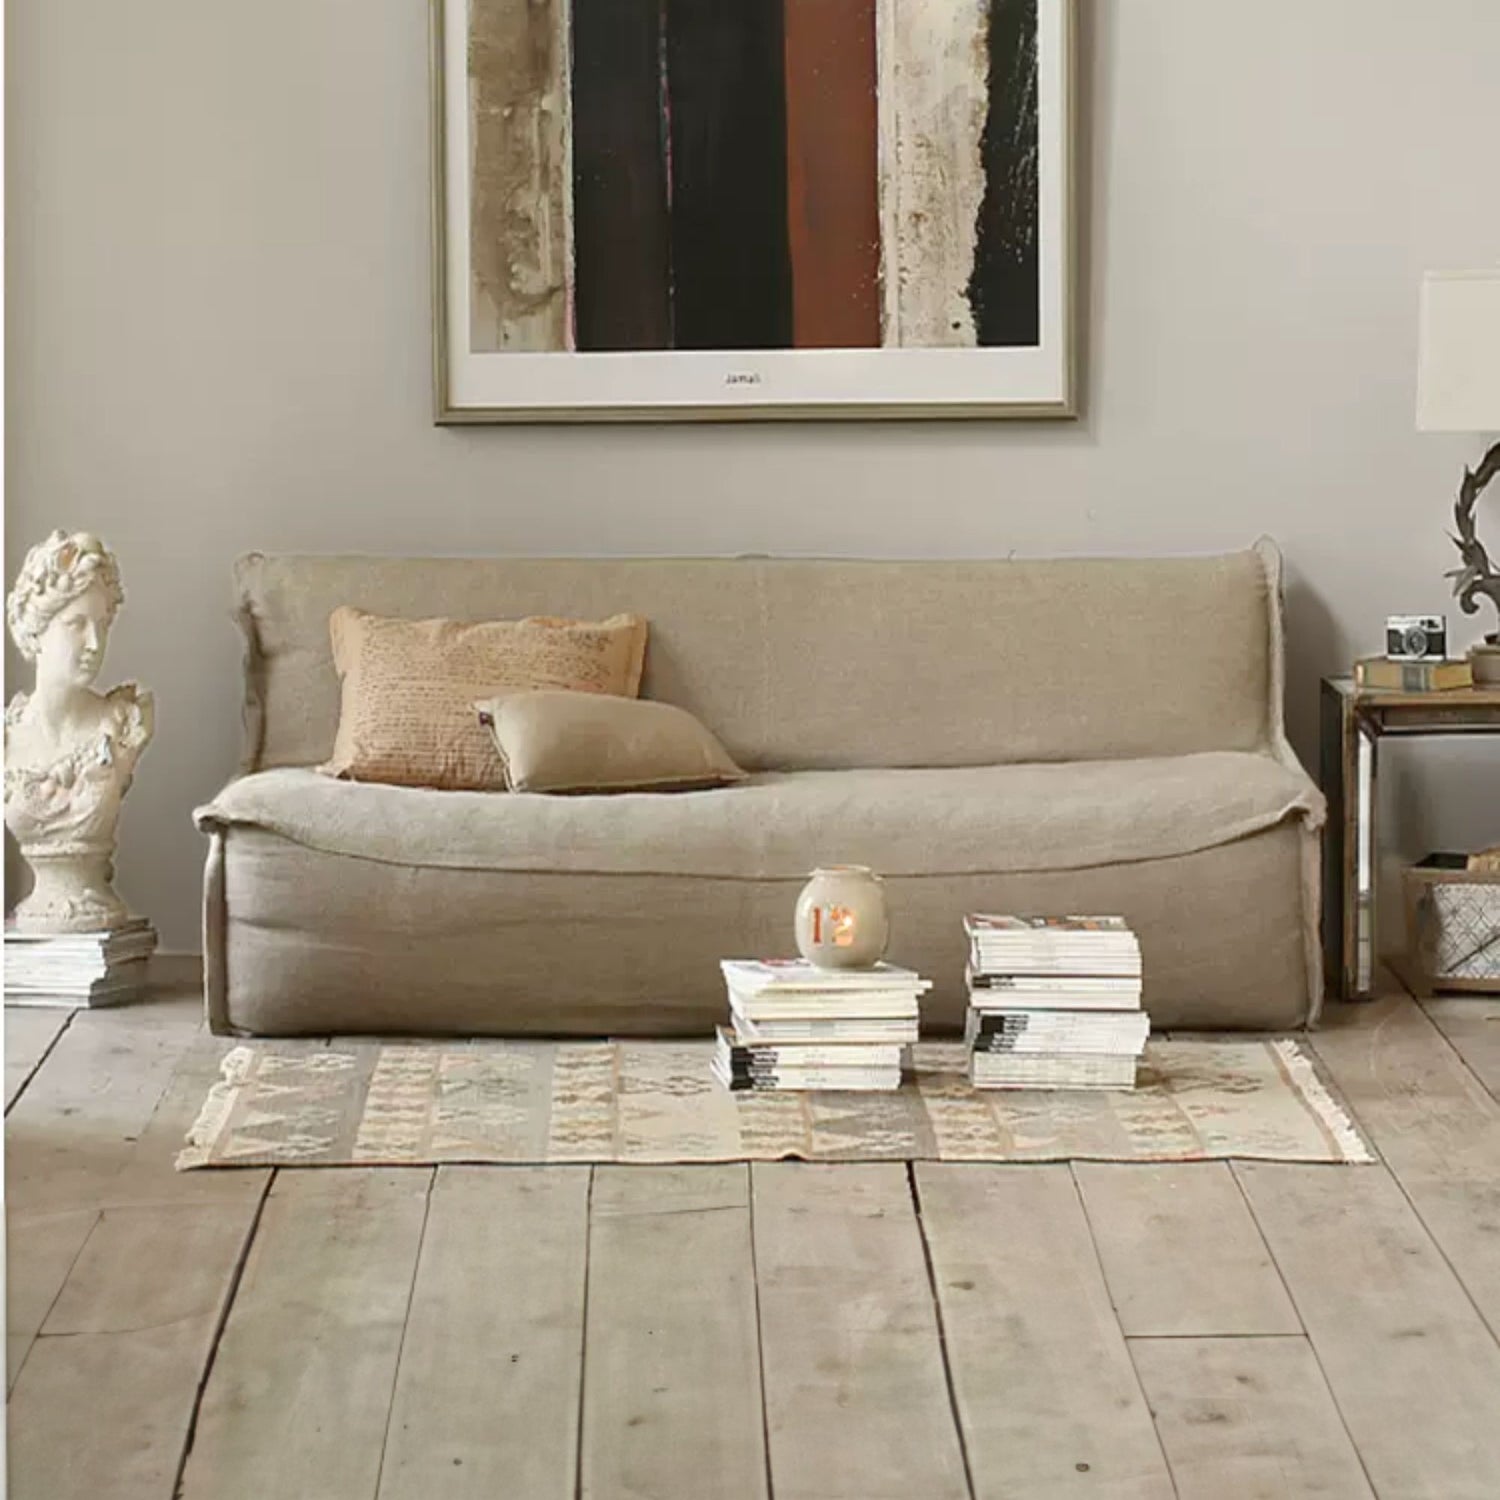 Cubo brown fabric sofa in living room setting